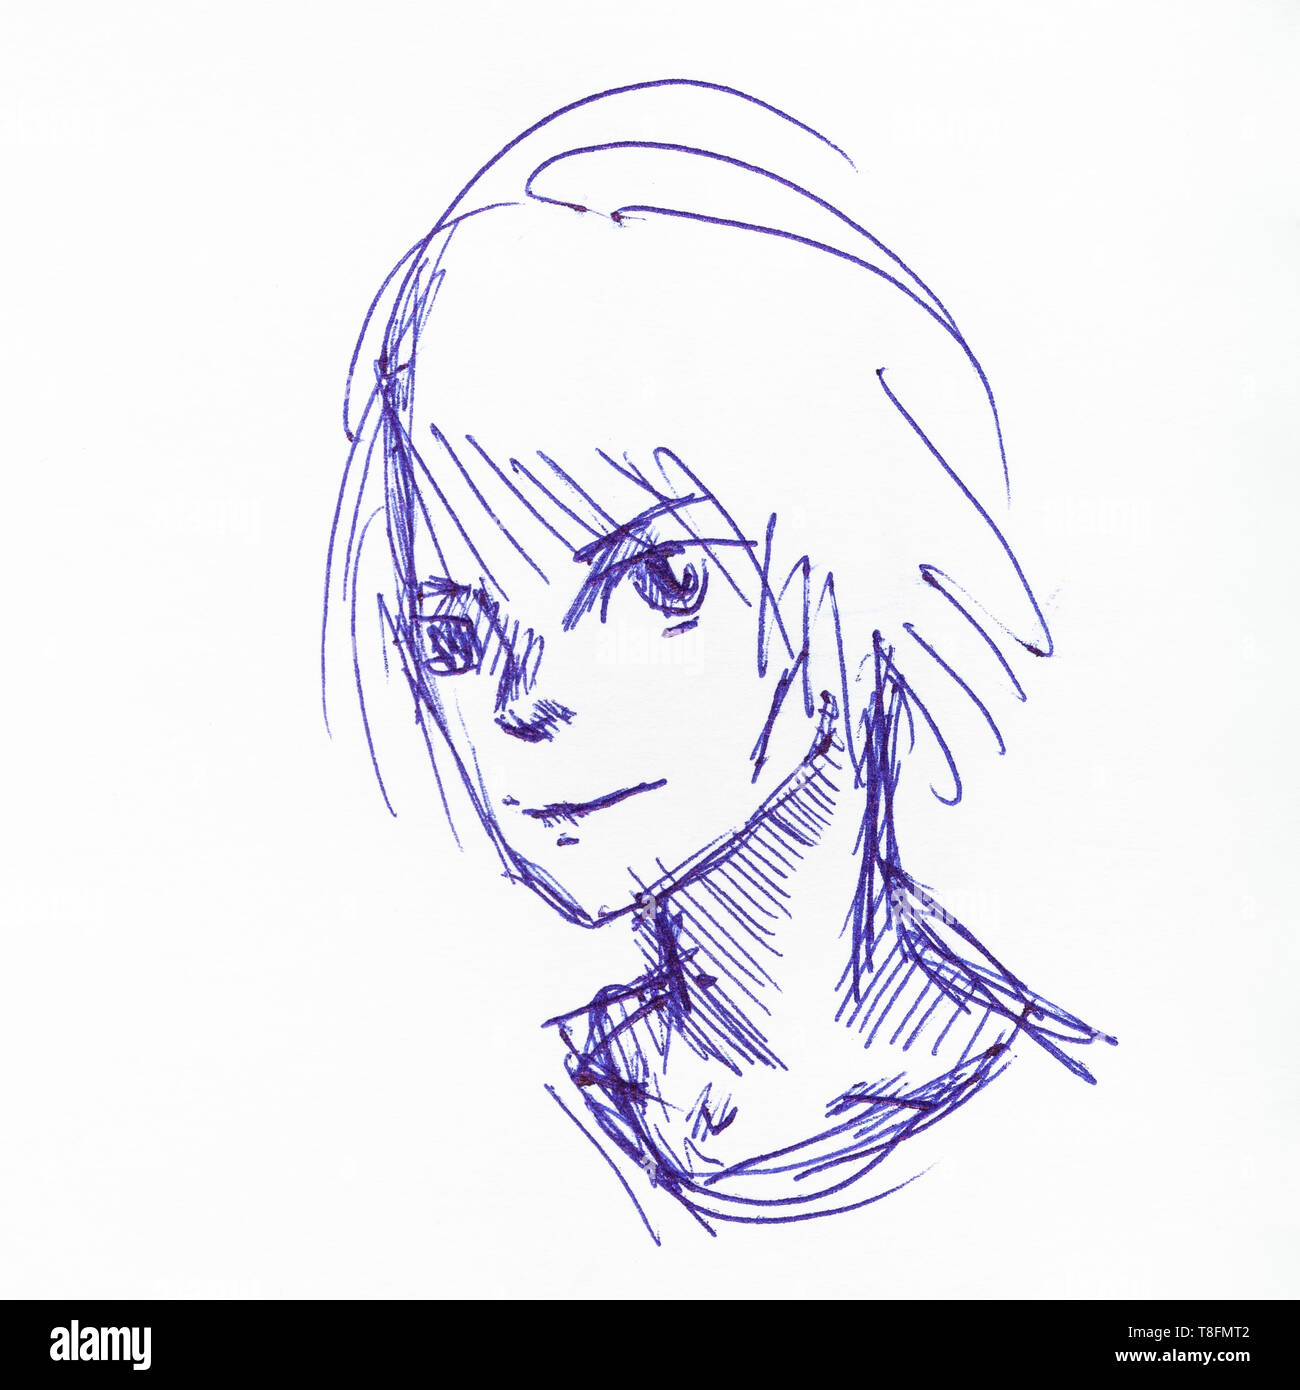 Lexica - Anime boy, side part hair, blackt shirt, face, looking at viewer